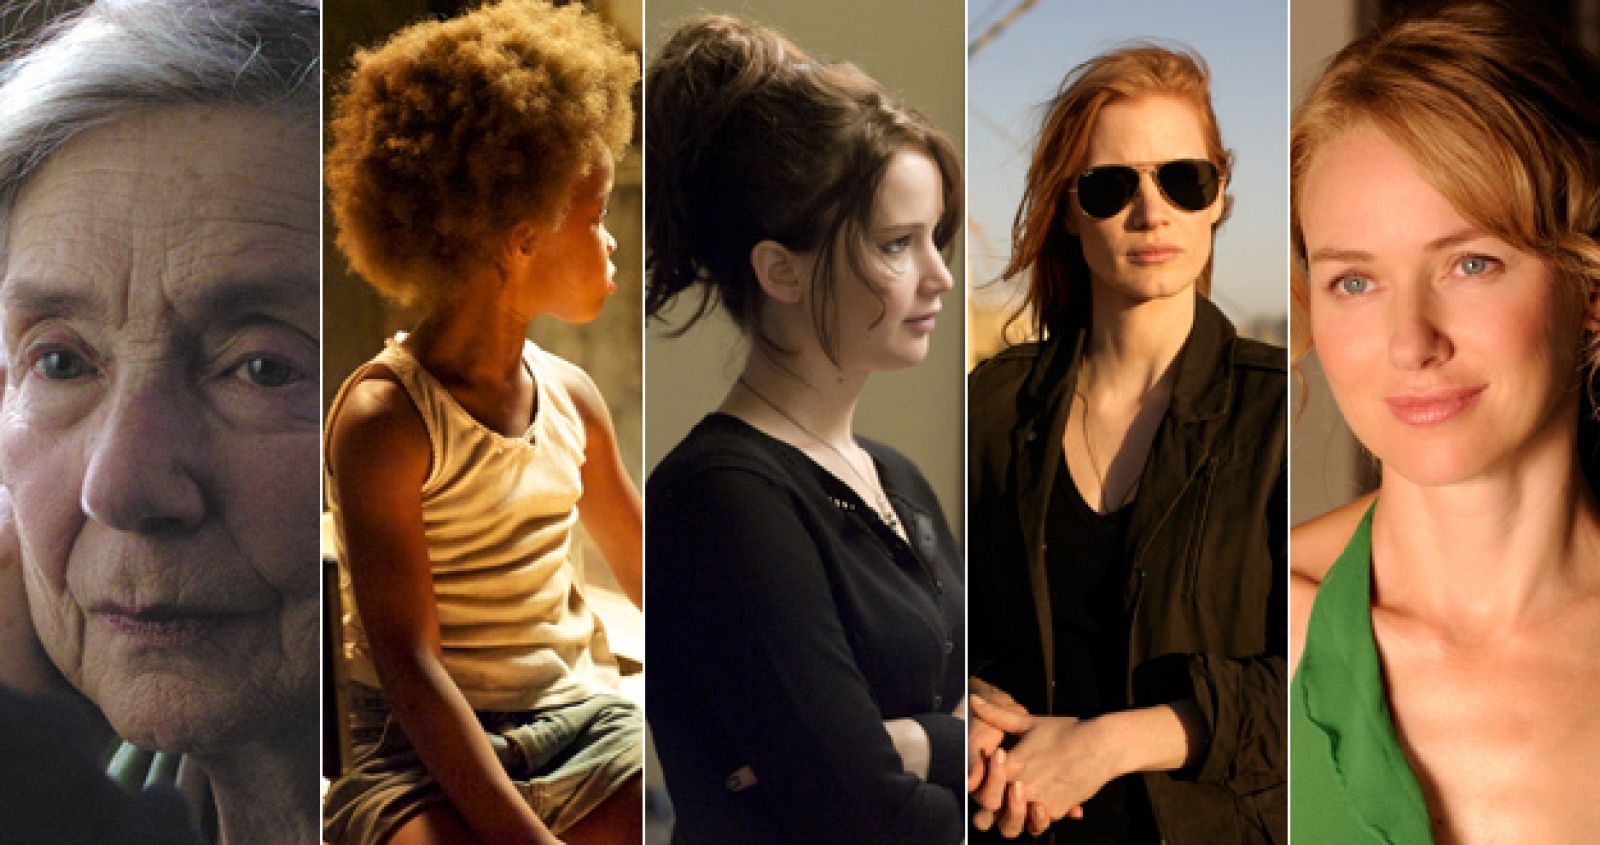 Emmanelle Riva, Quvenzhané Wallis, Jennifer Lawrence, jessica Chastain y Naomi Watts, las nominadas a mejor actriz en los Oscar.